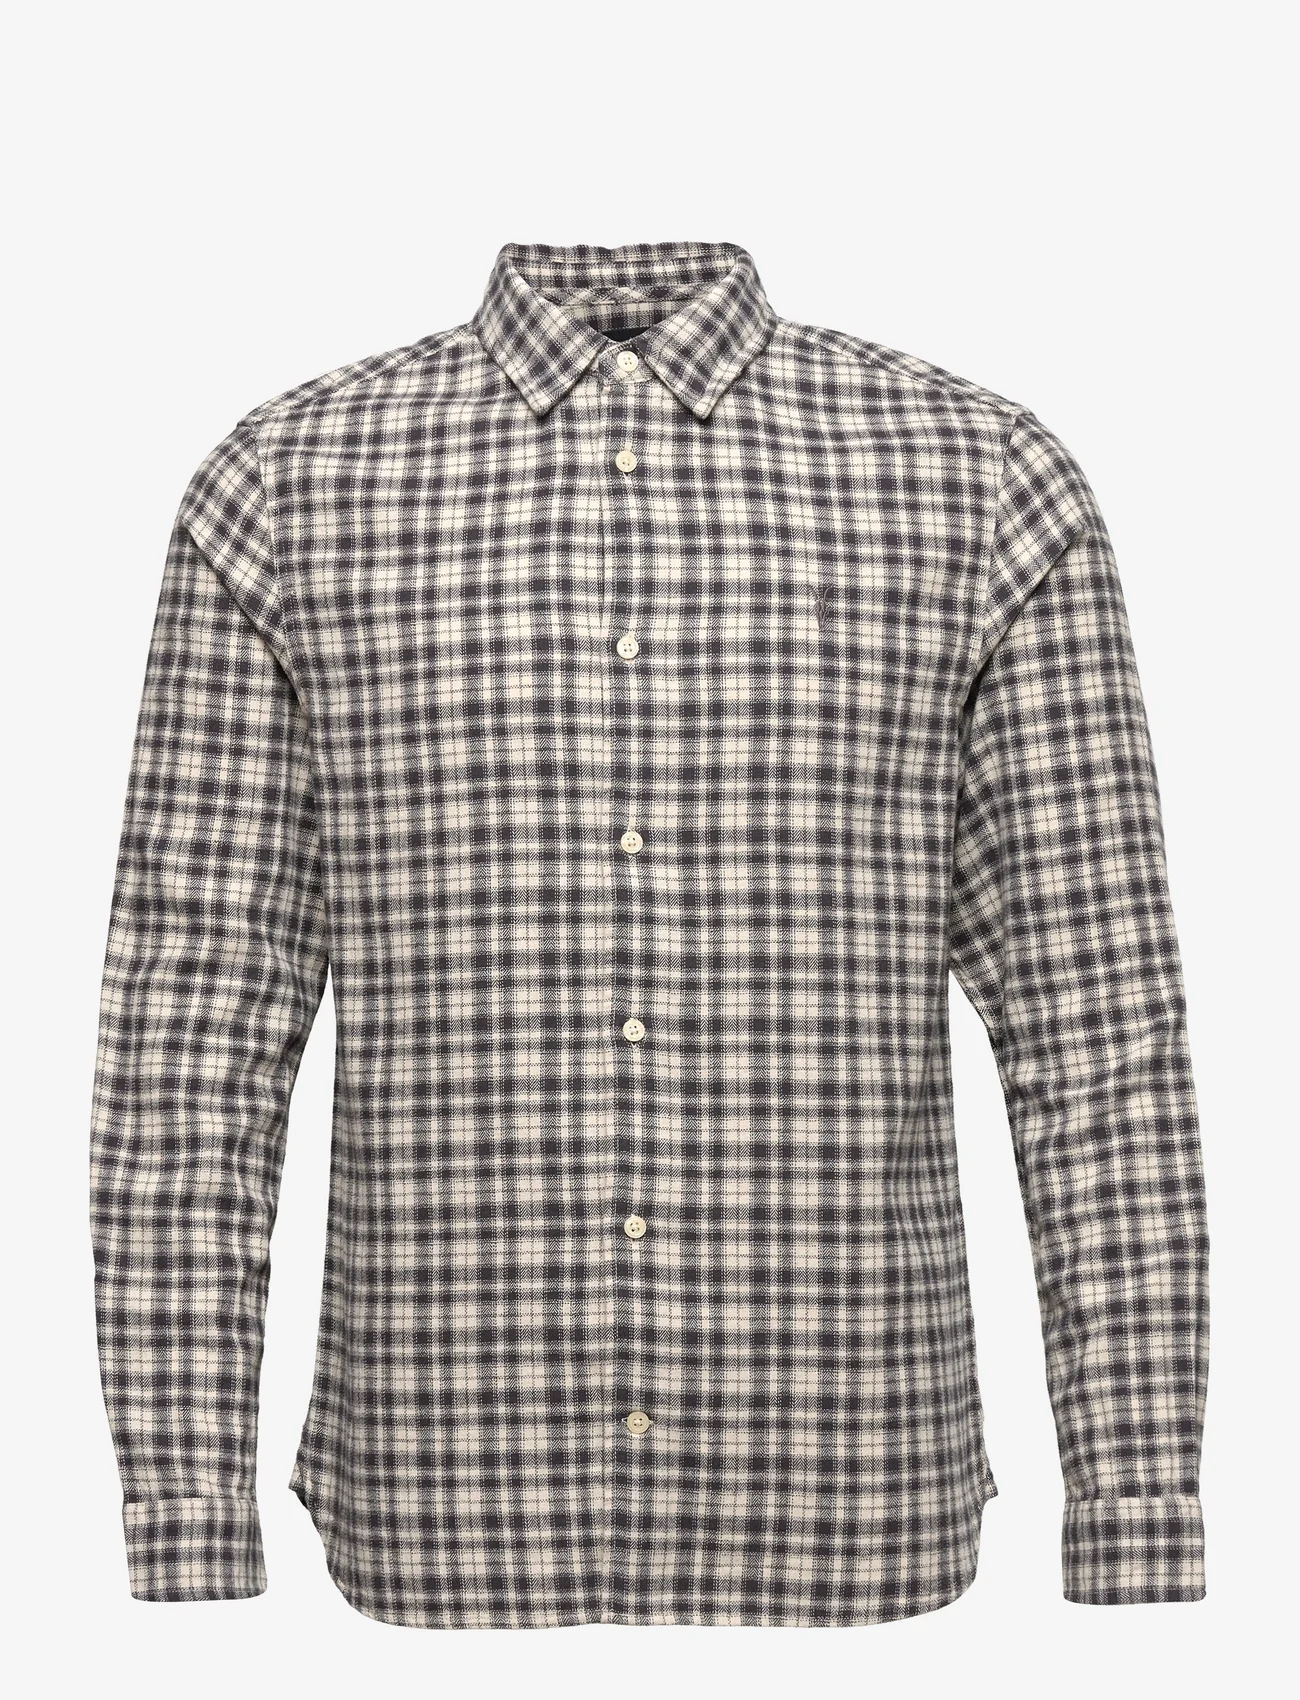 AllSaints - LEXINGTON LS SHIRT - checkered shirts - ecru - 0